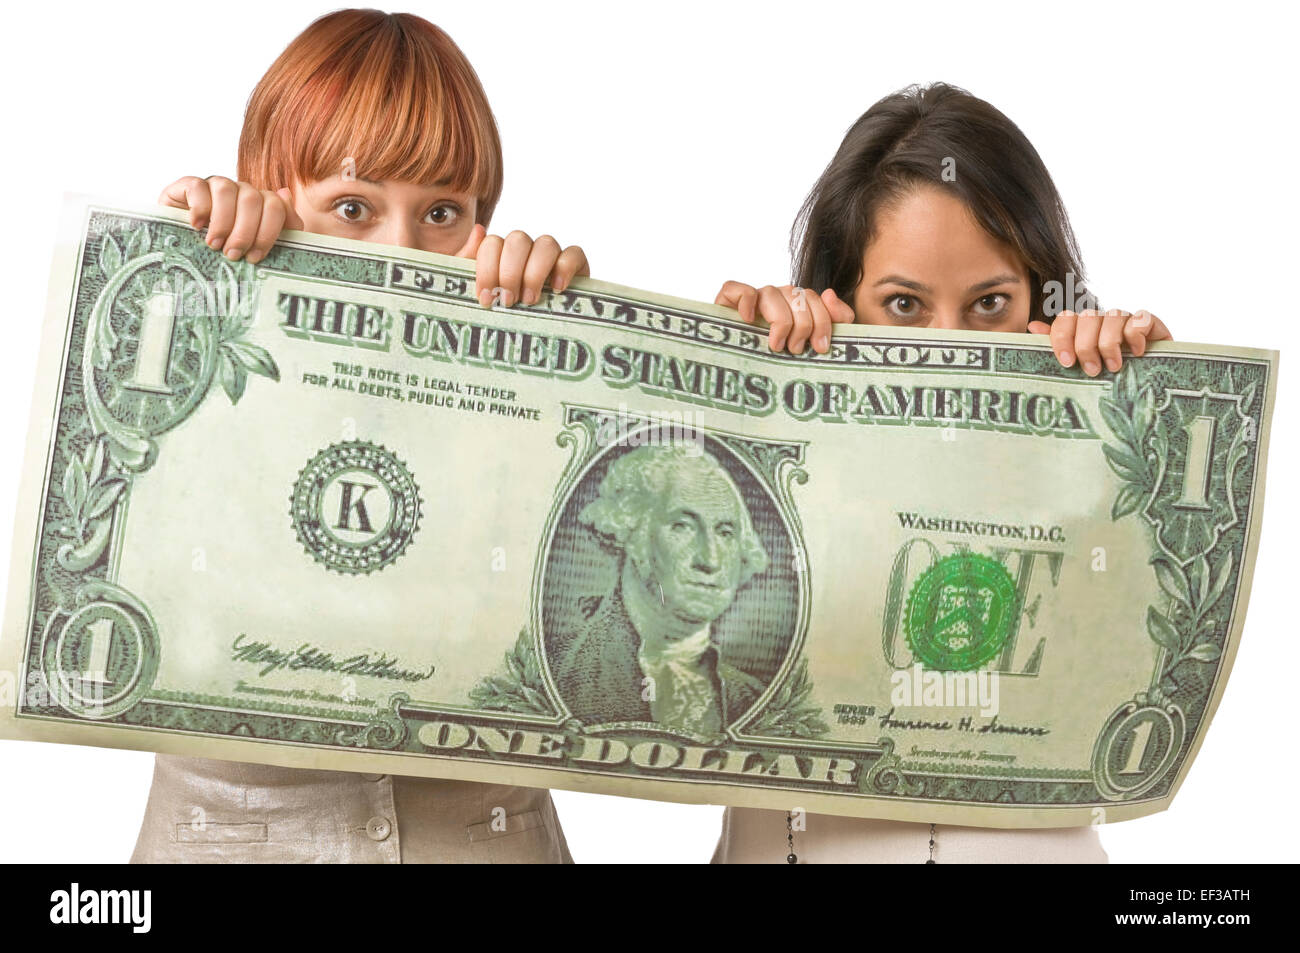 Two women peeking from behind oversized dollar bill Stock Photo